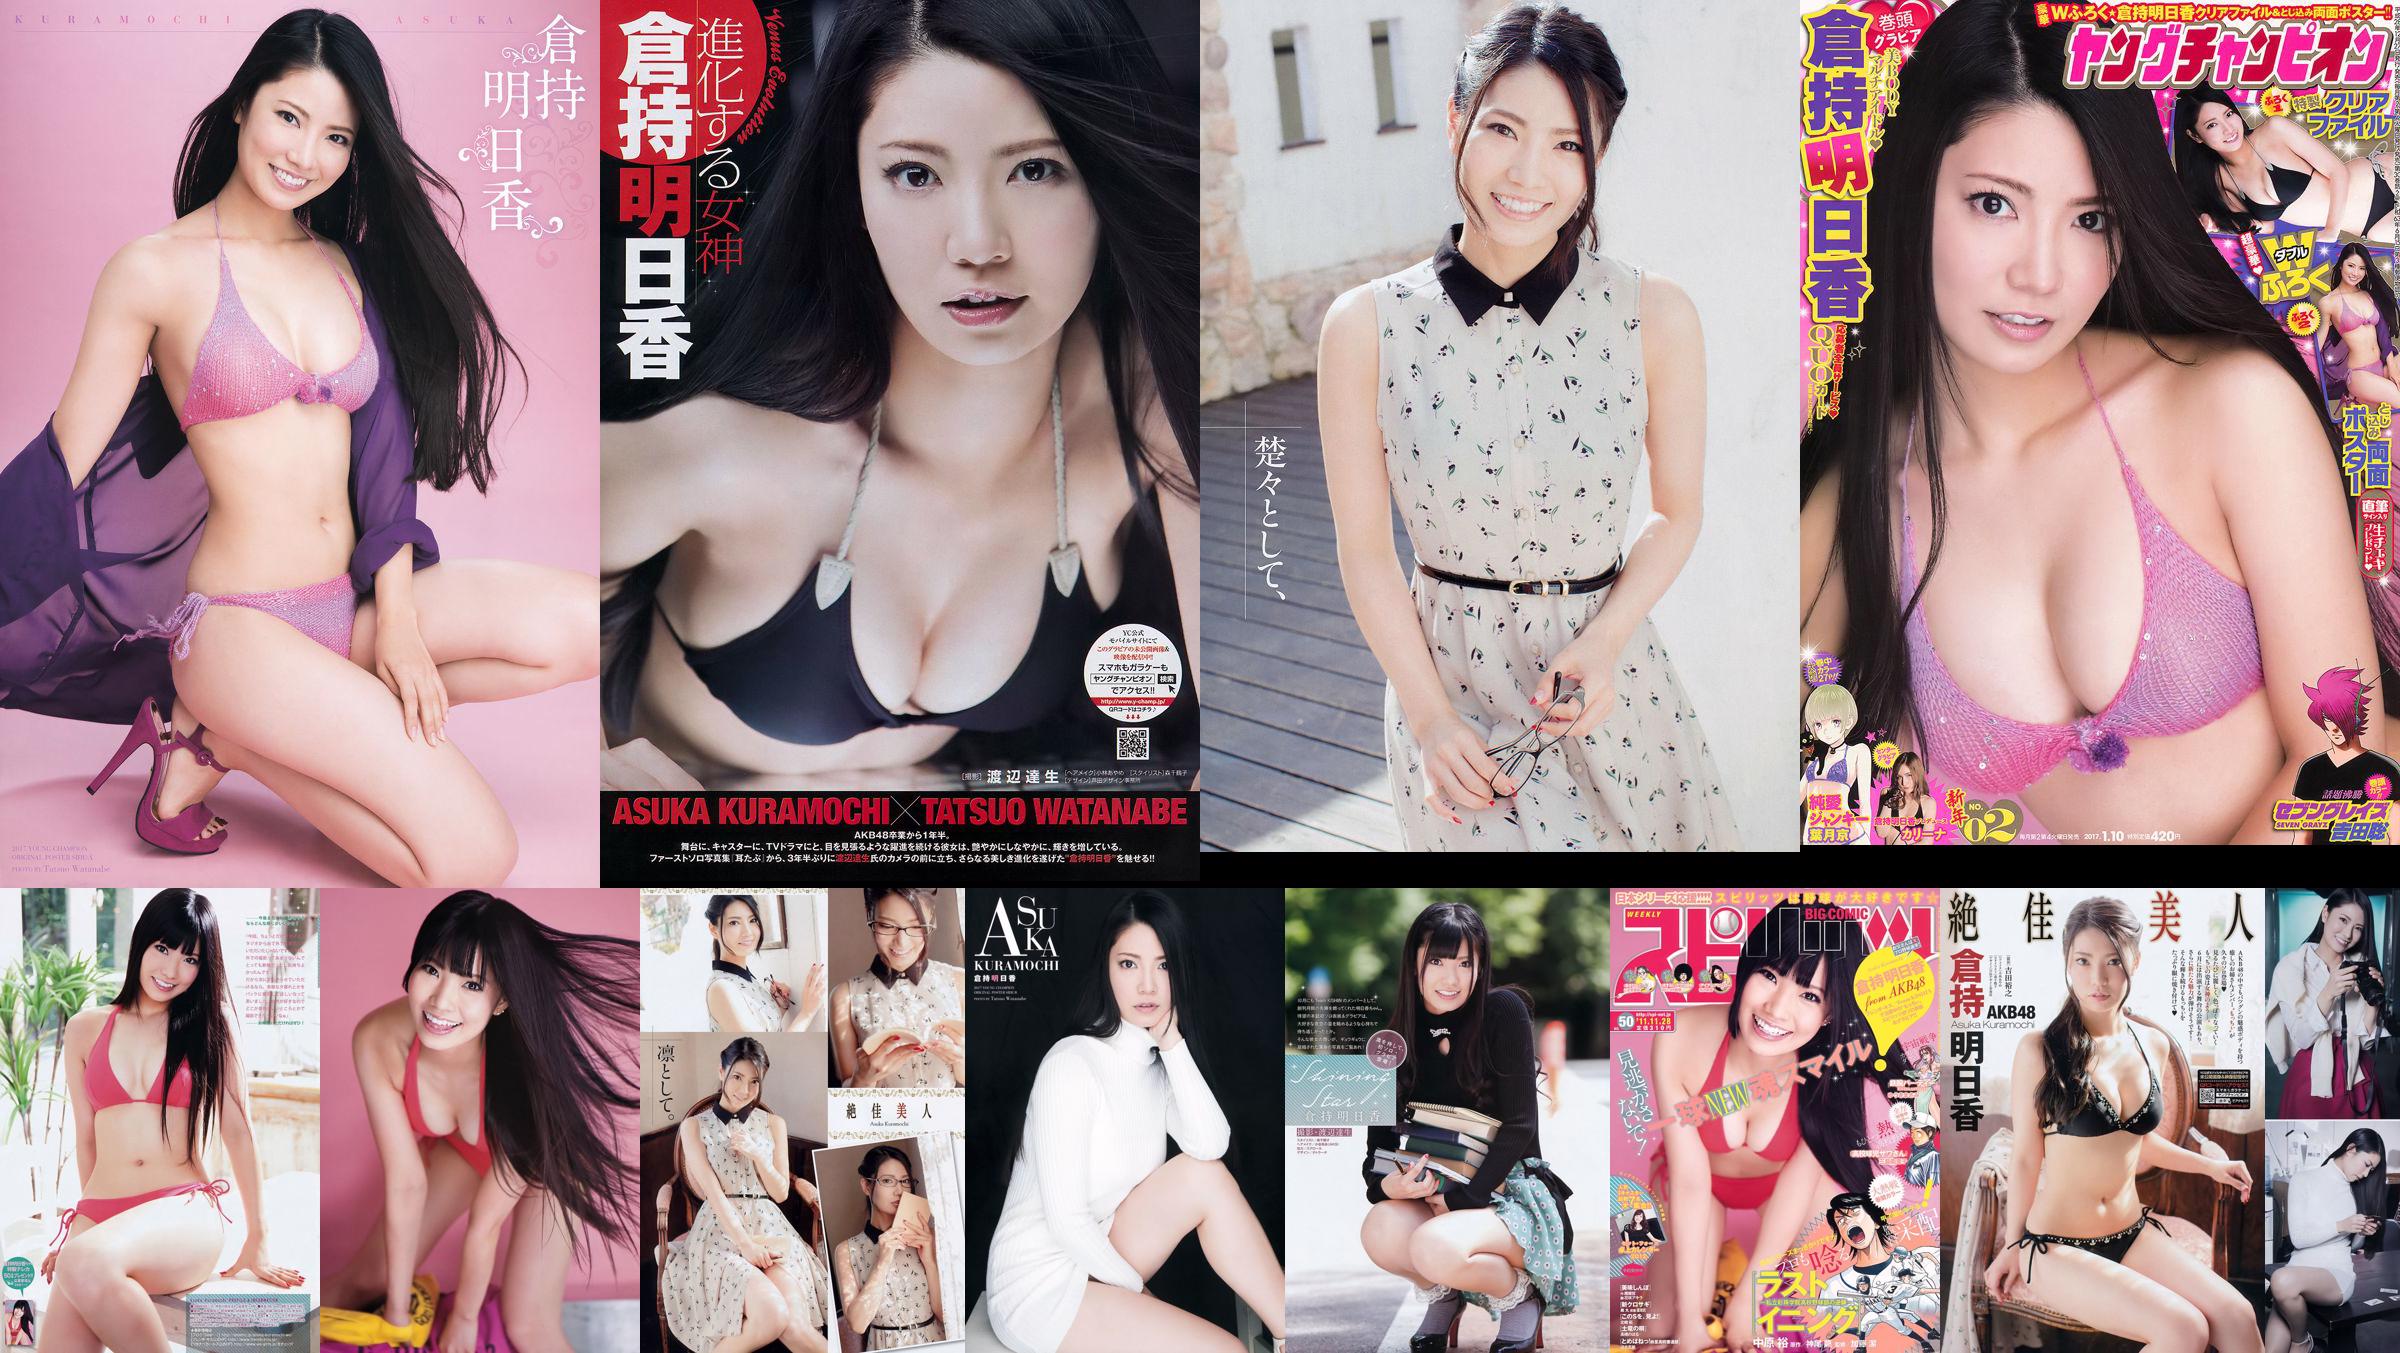 [Joven Campeona] Asuka Kuramochi 2015 No 09 Revista fotográfica No.839cfc Página 7